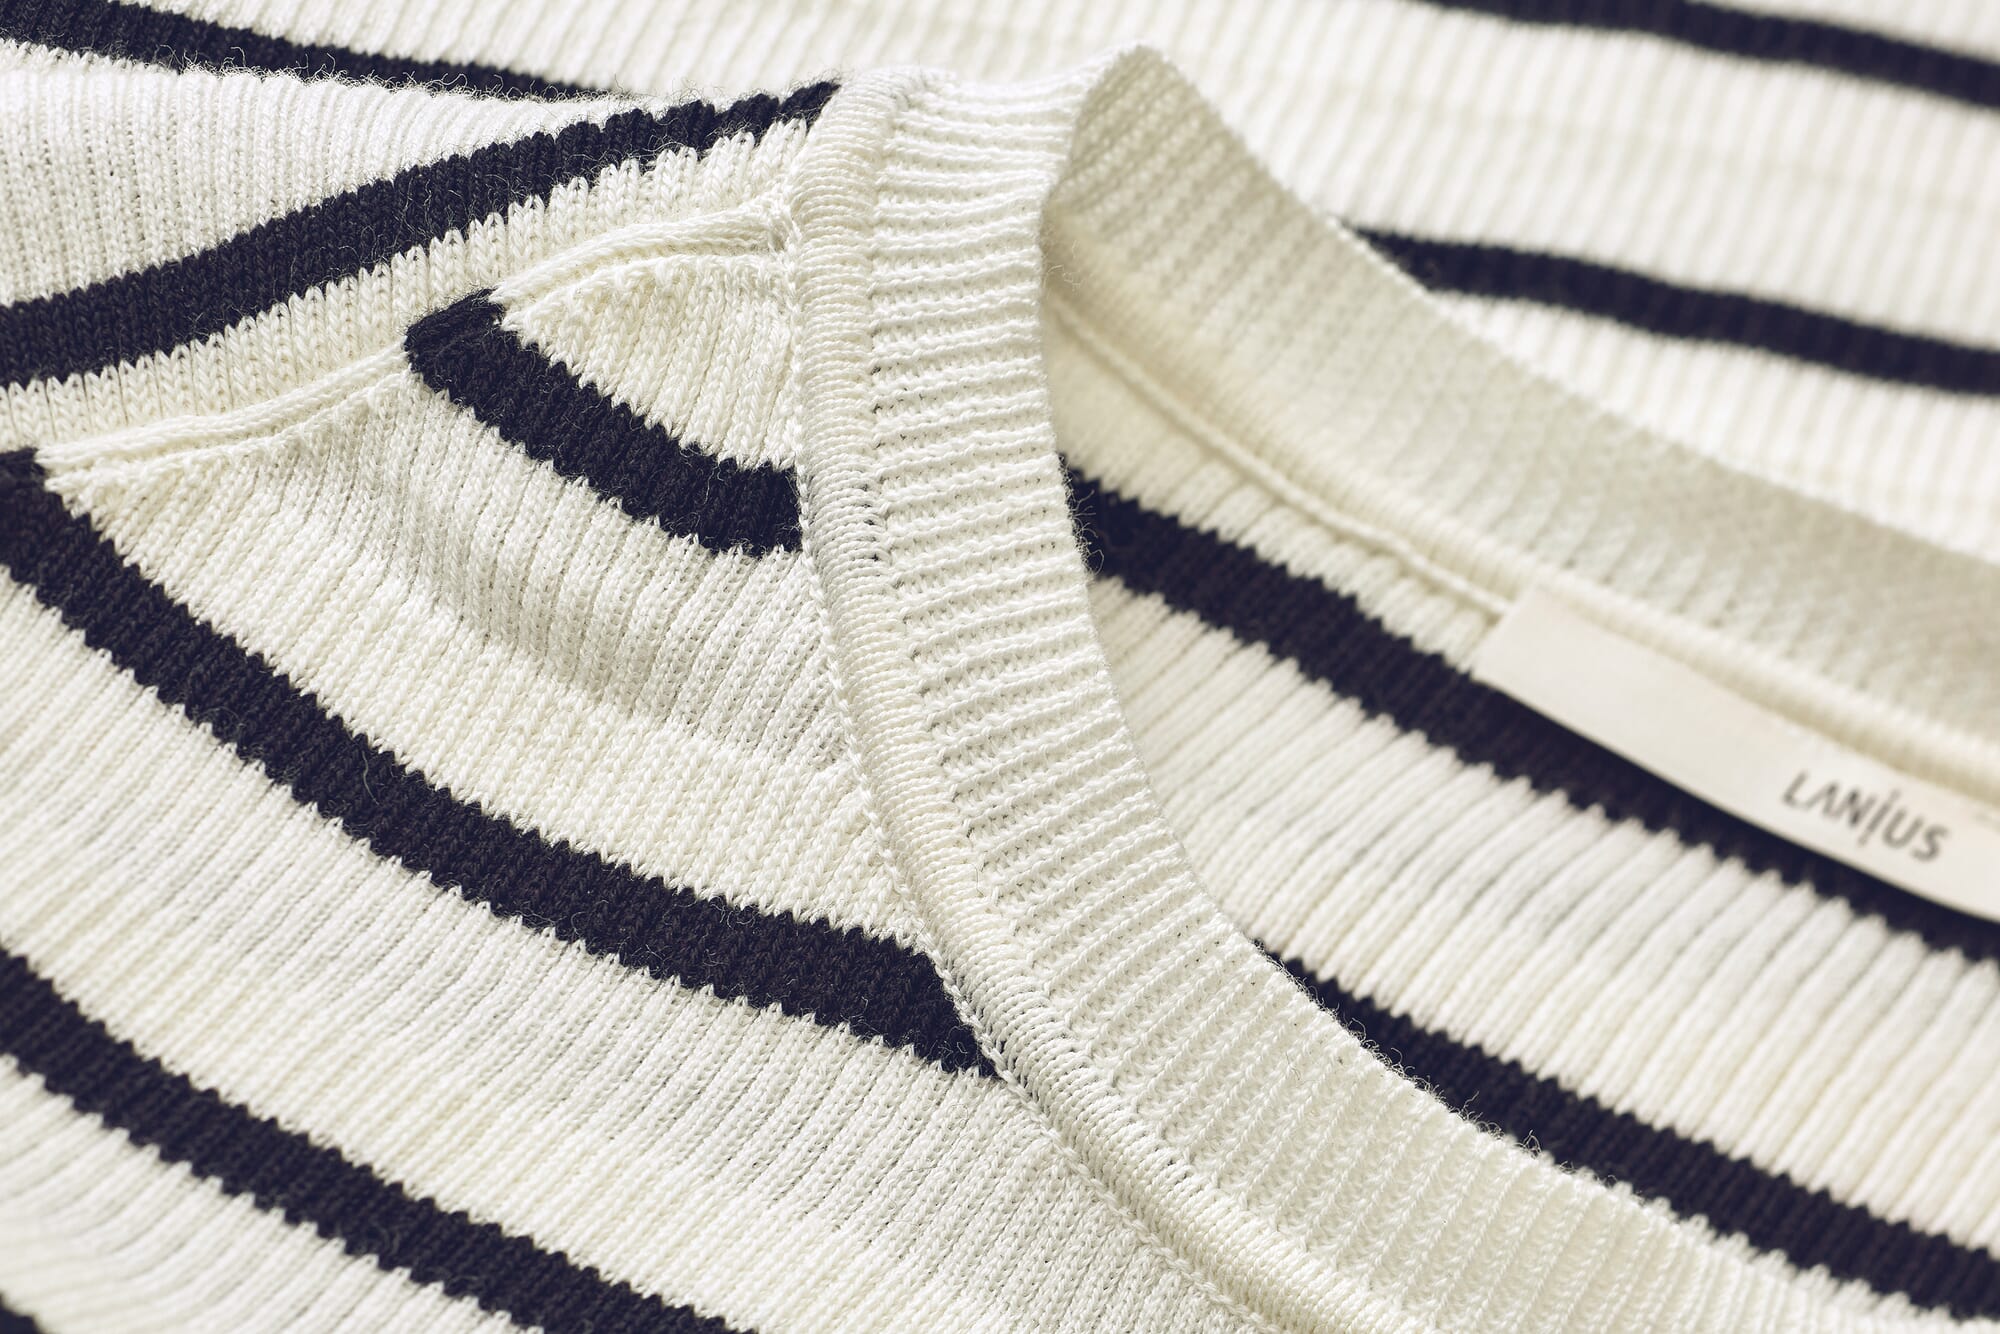 Fine-knit Sweater - Black/white striped - Ladies